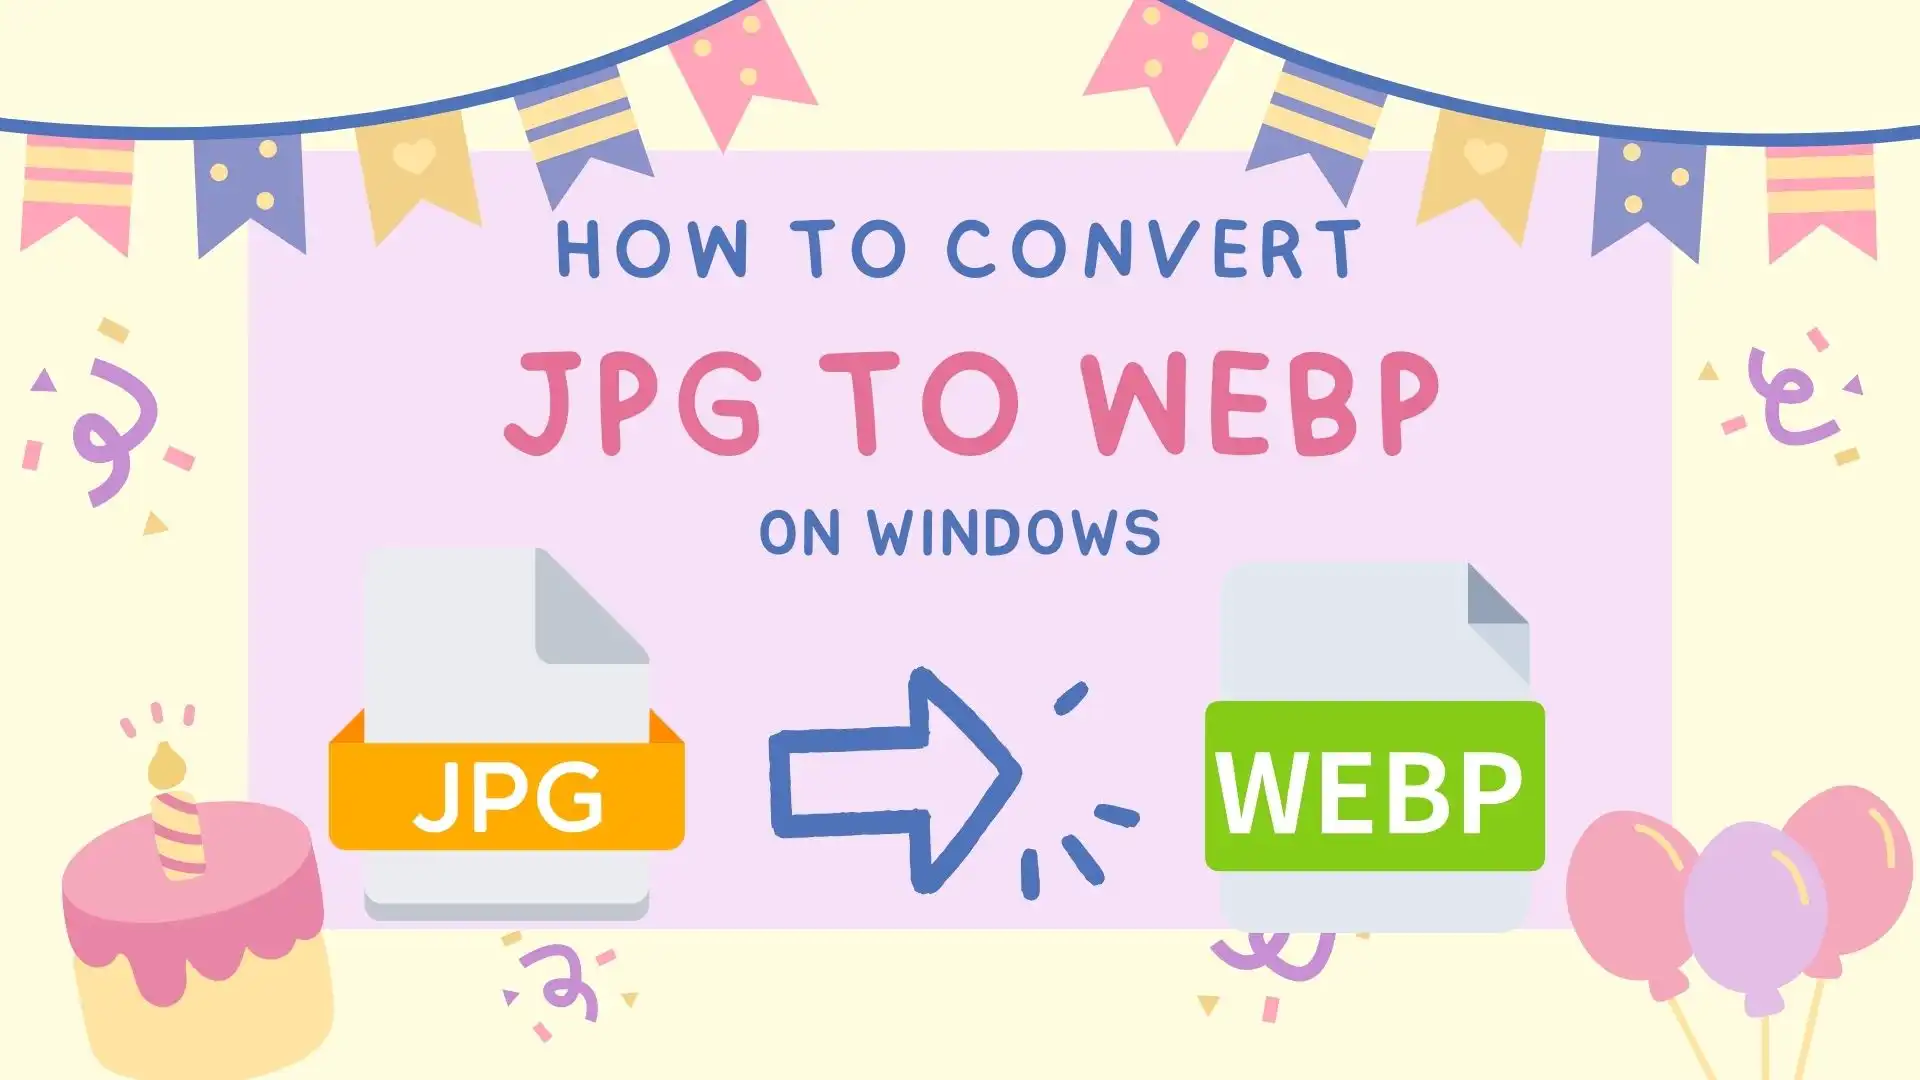 WebP to JPG Conversion Tricks